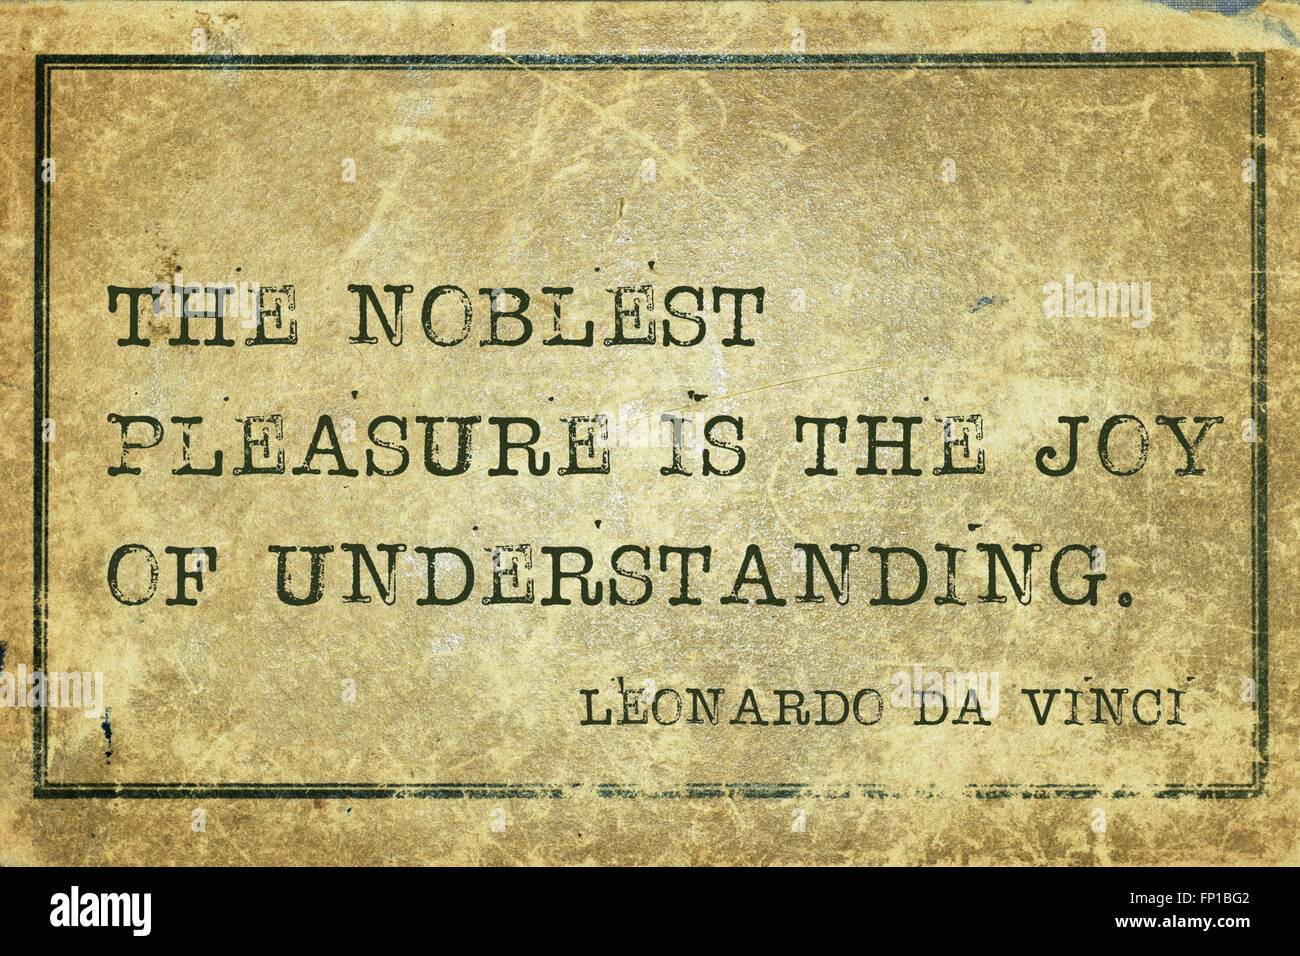 The noblest pleasure is the joy of understanding - ancient Italian artist Leonardo da Vinci quote printed on grunge vintage card Stock Photo